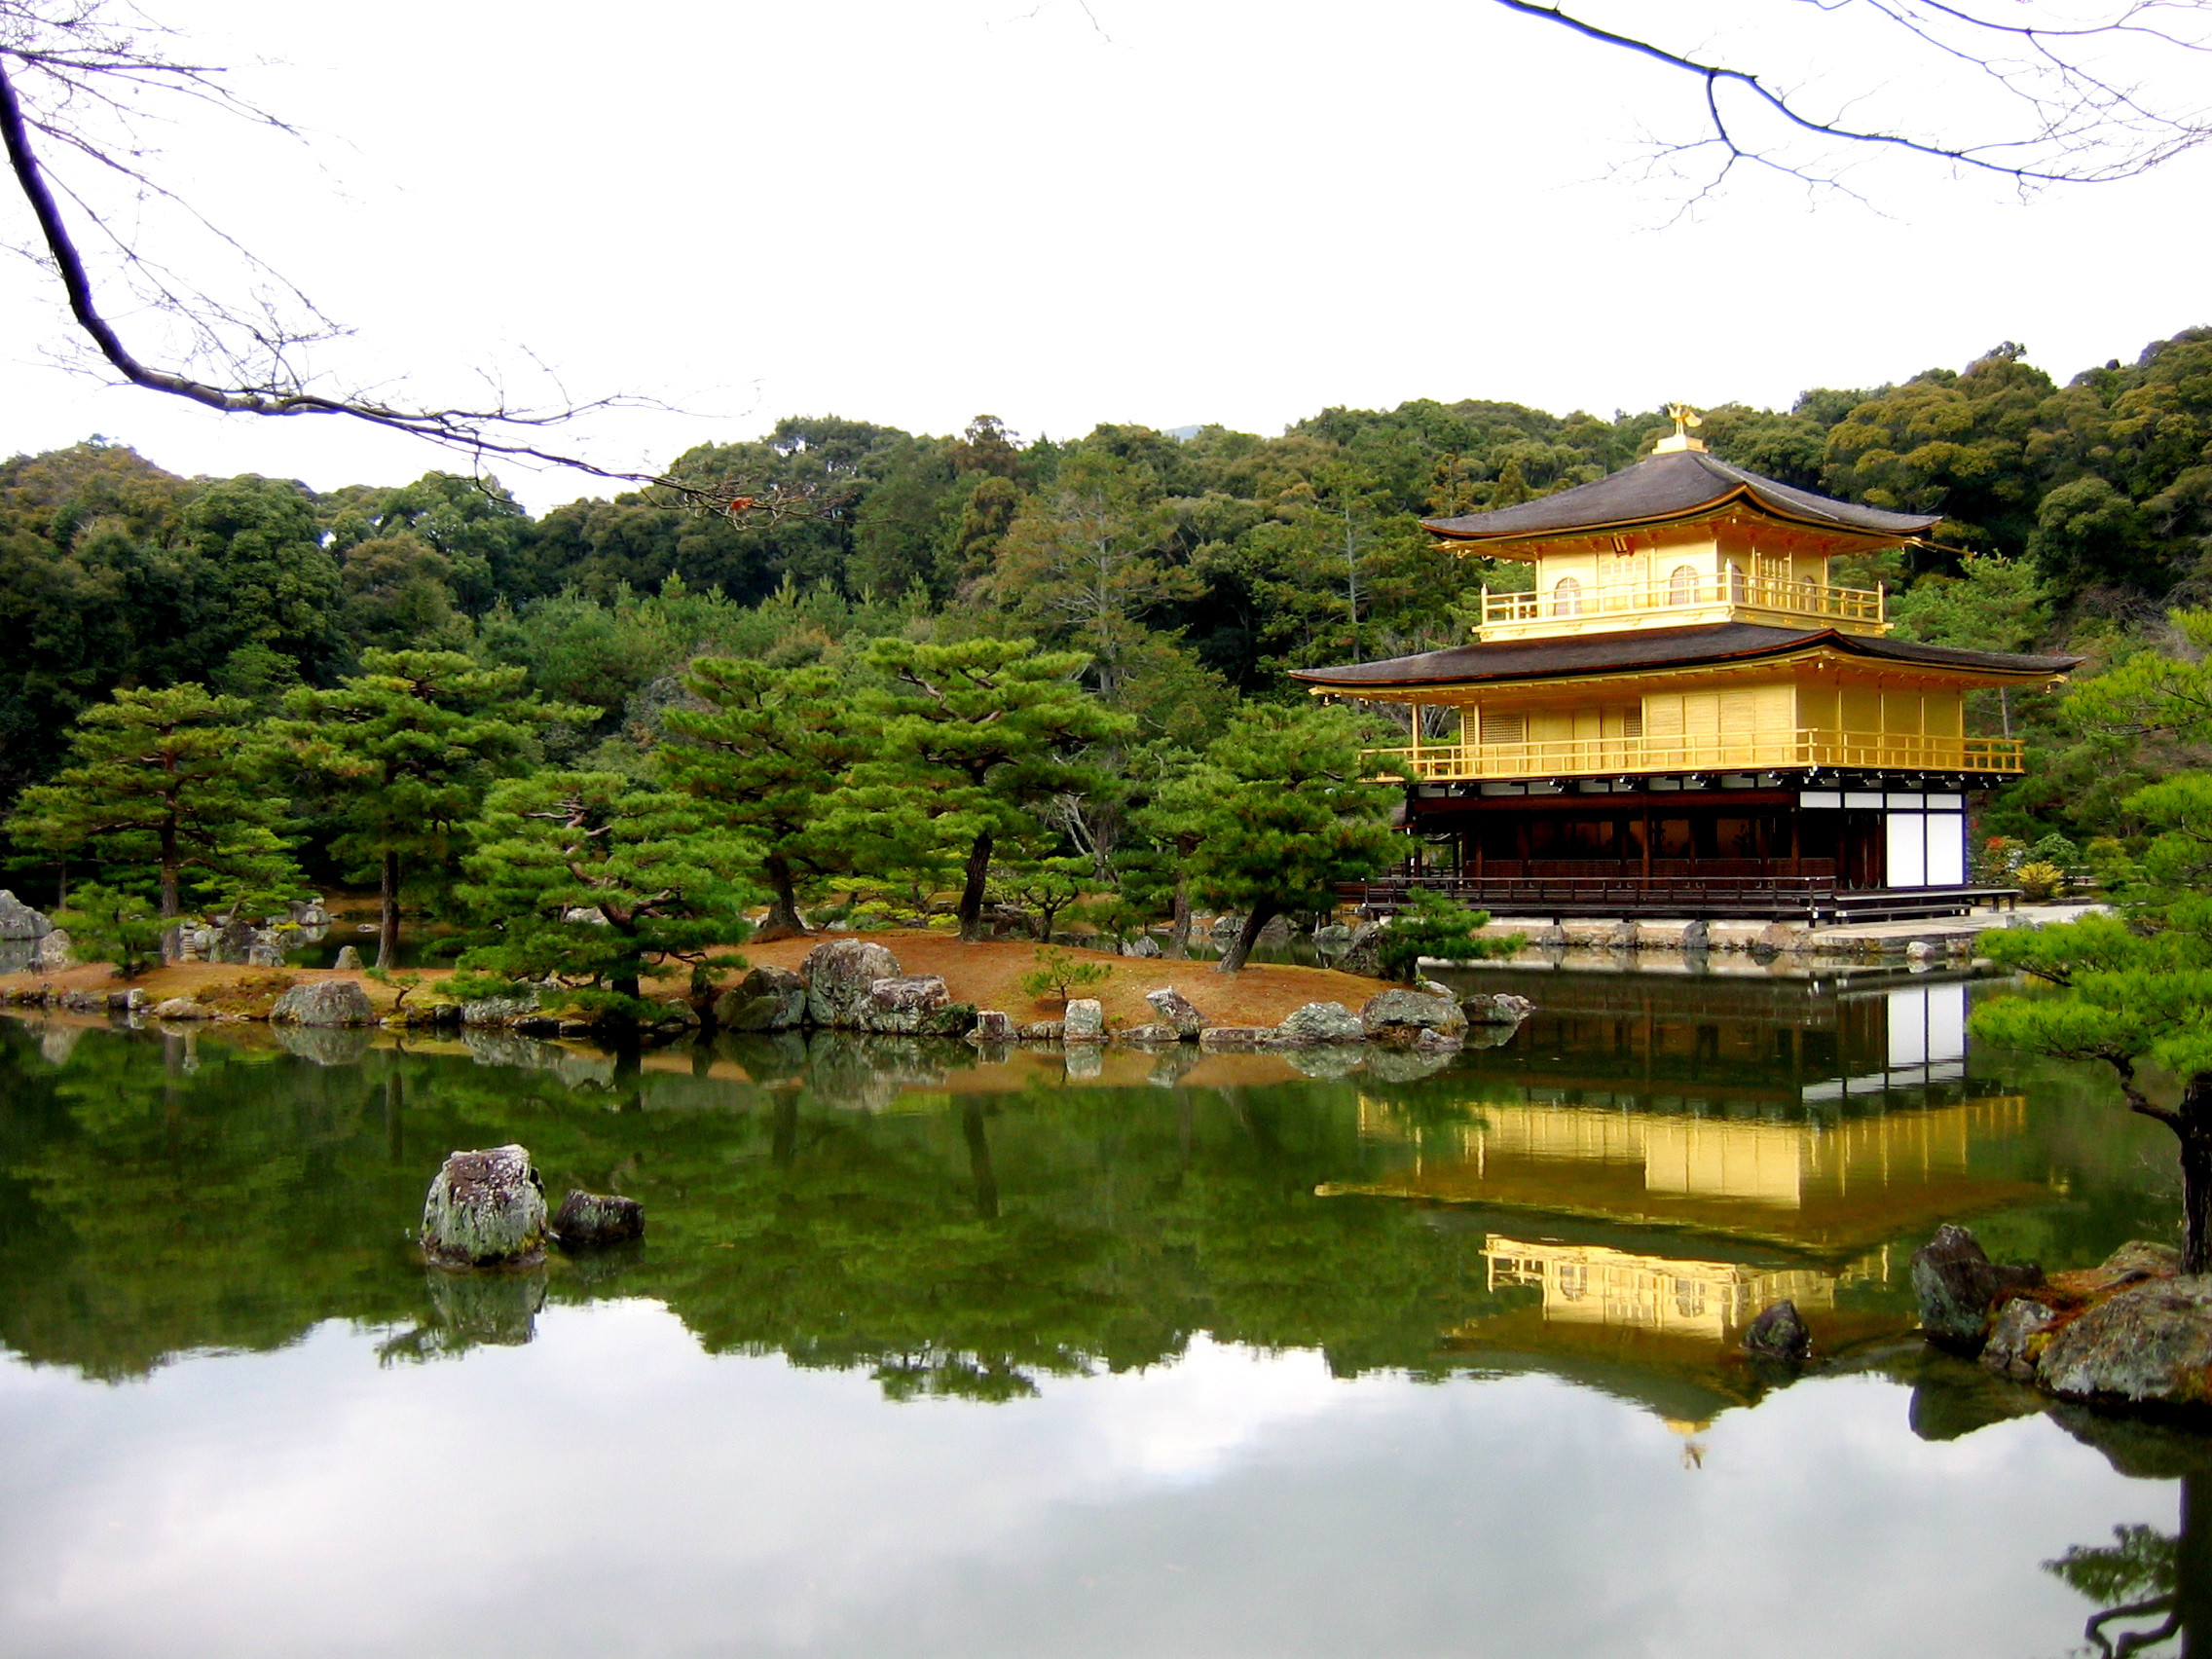 kuil paviliun emas kinkaku-ji from wikimedia